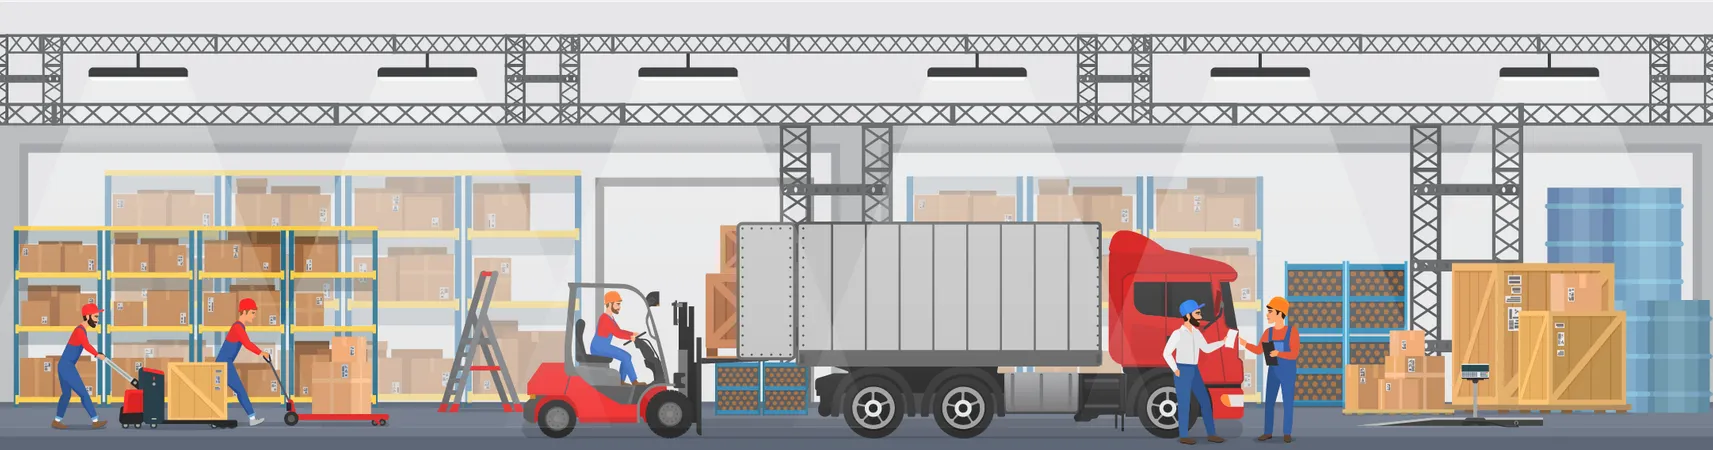 Shipping Service Illustration